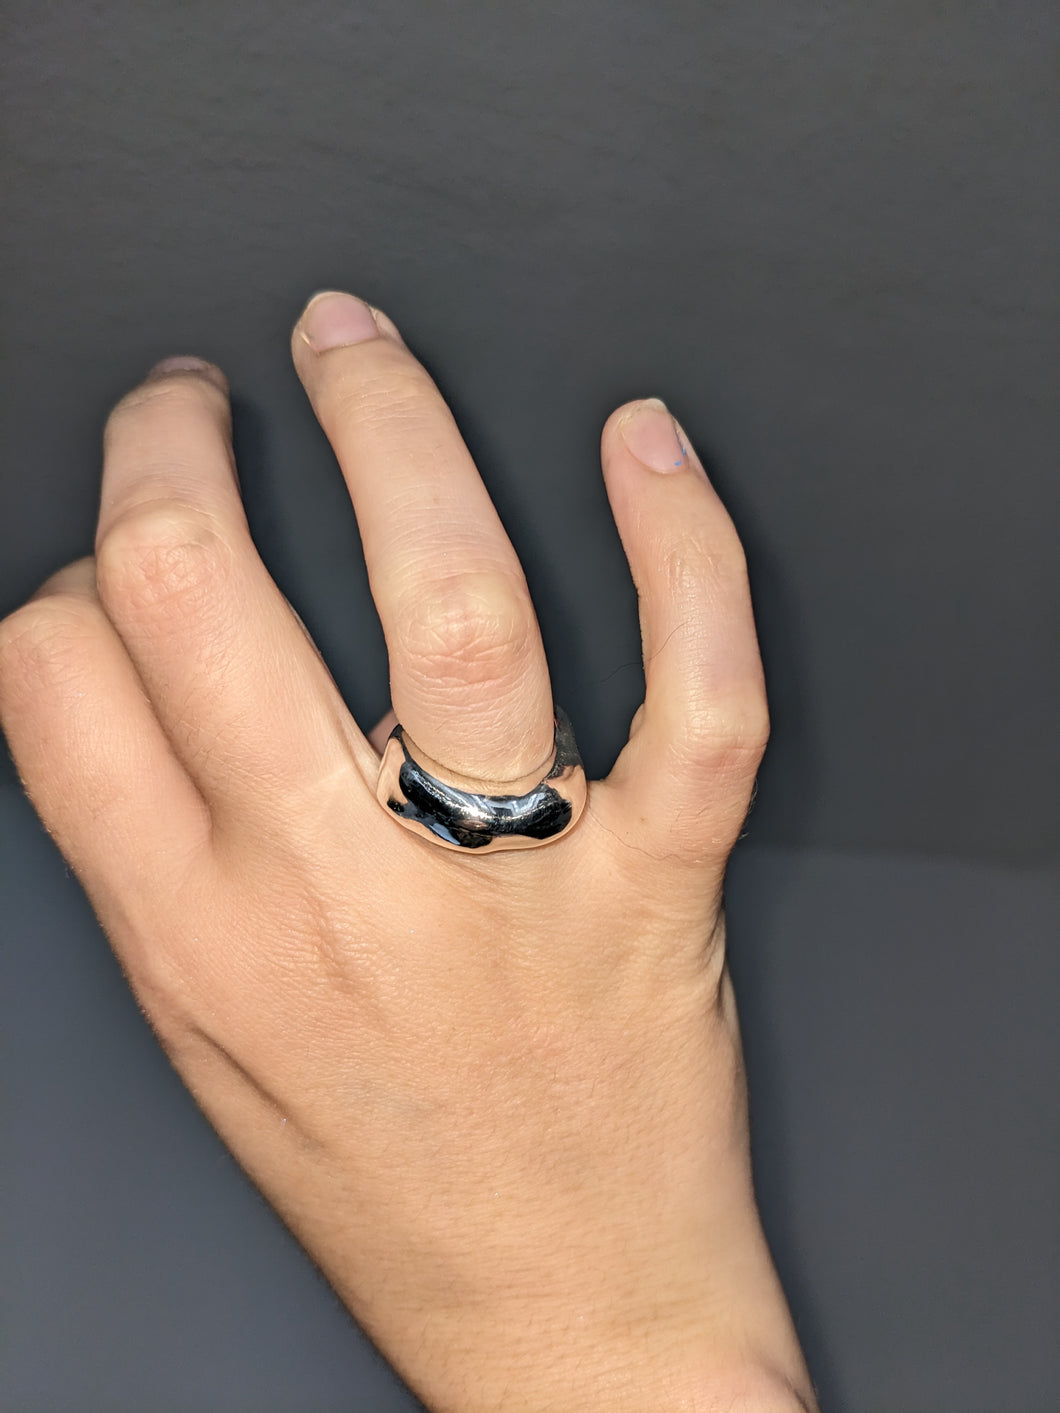 Sample silver ring I